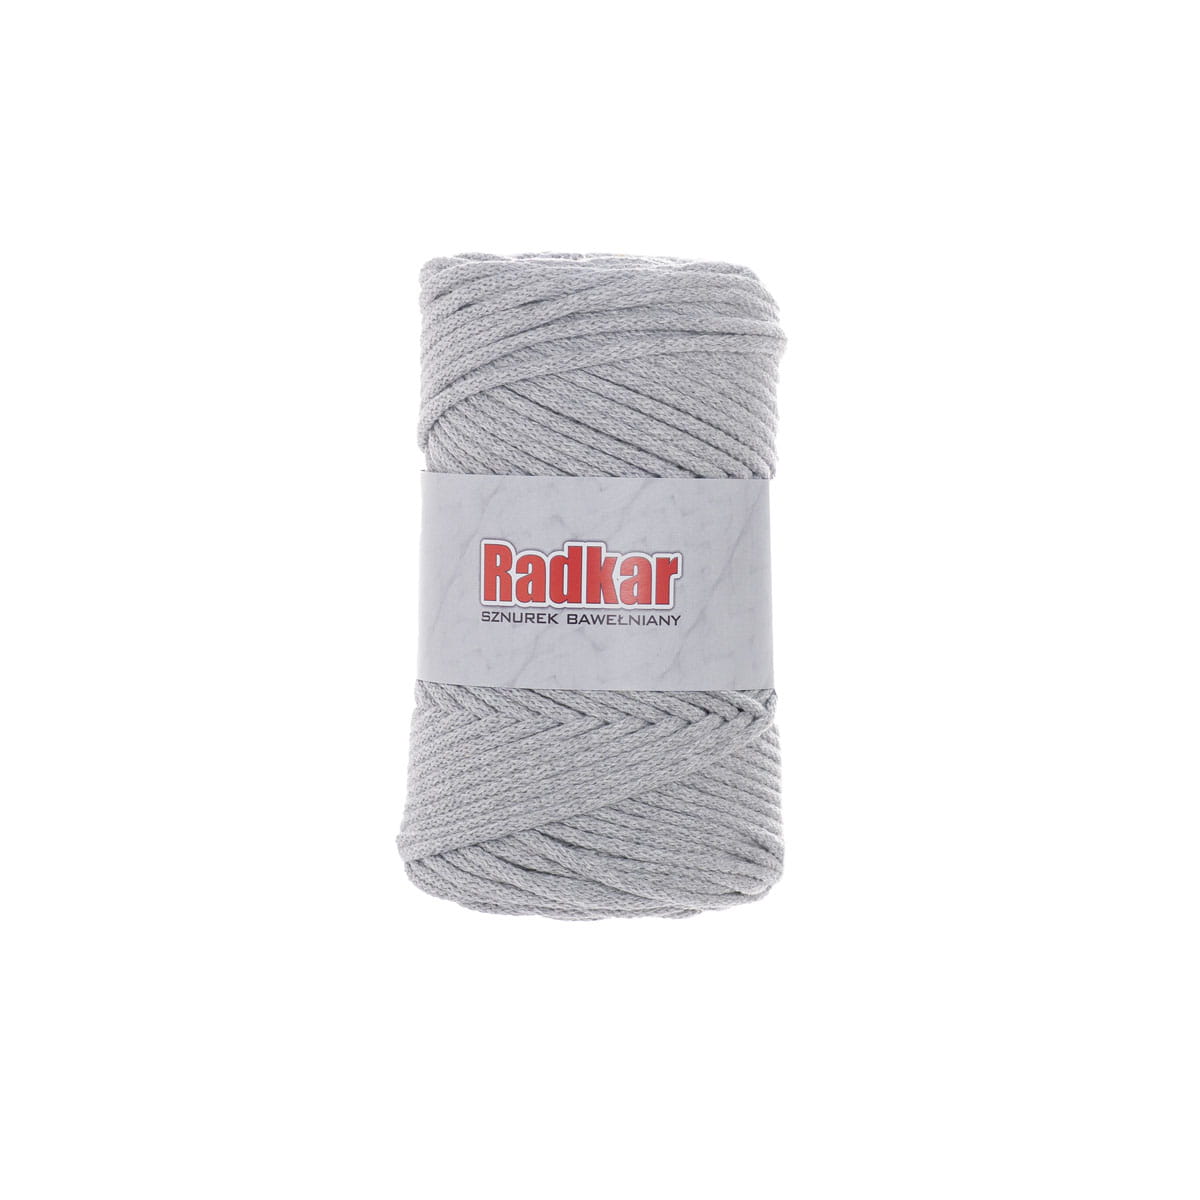 Light grey 100 3mm cotton cord